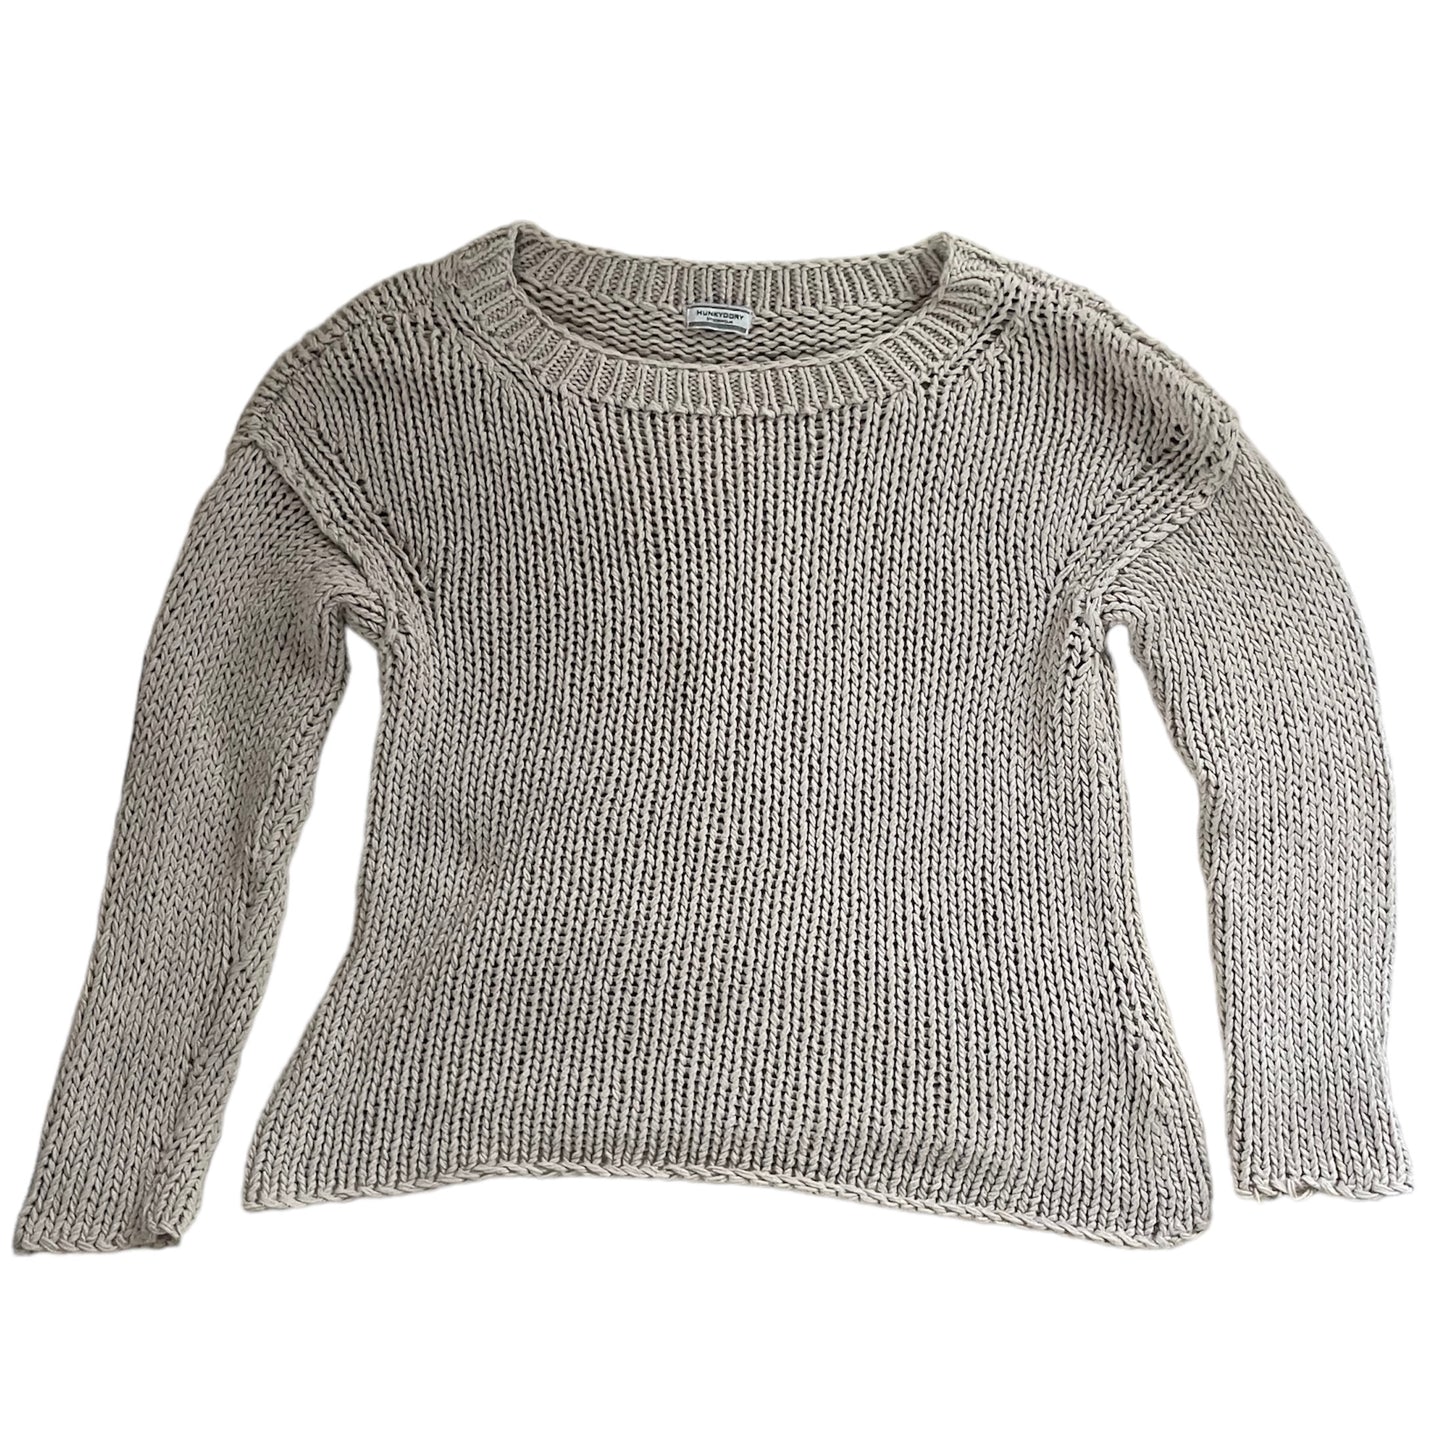 Hunkydory Knit Sweater